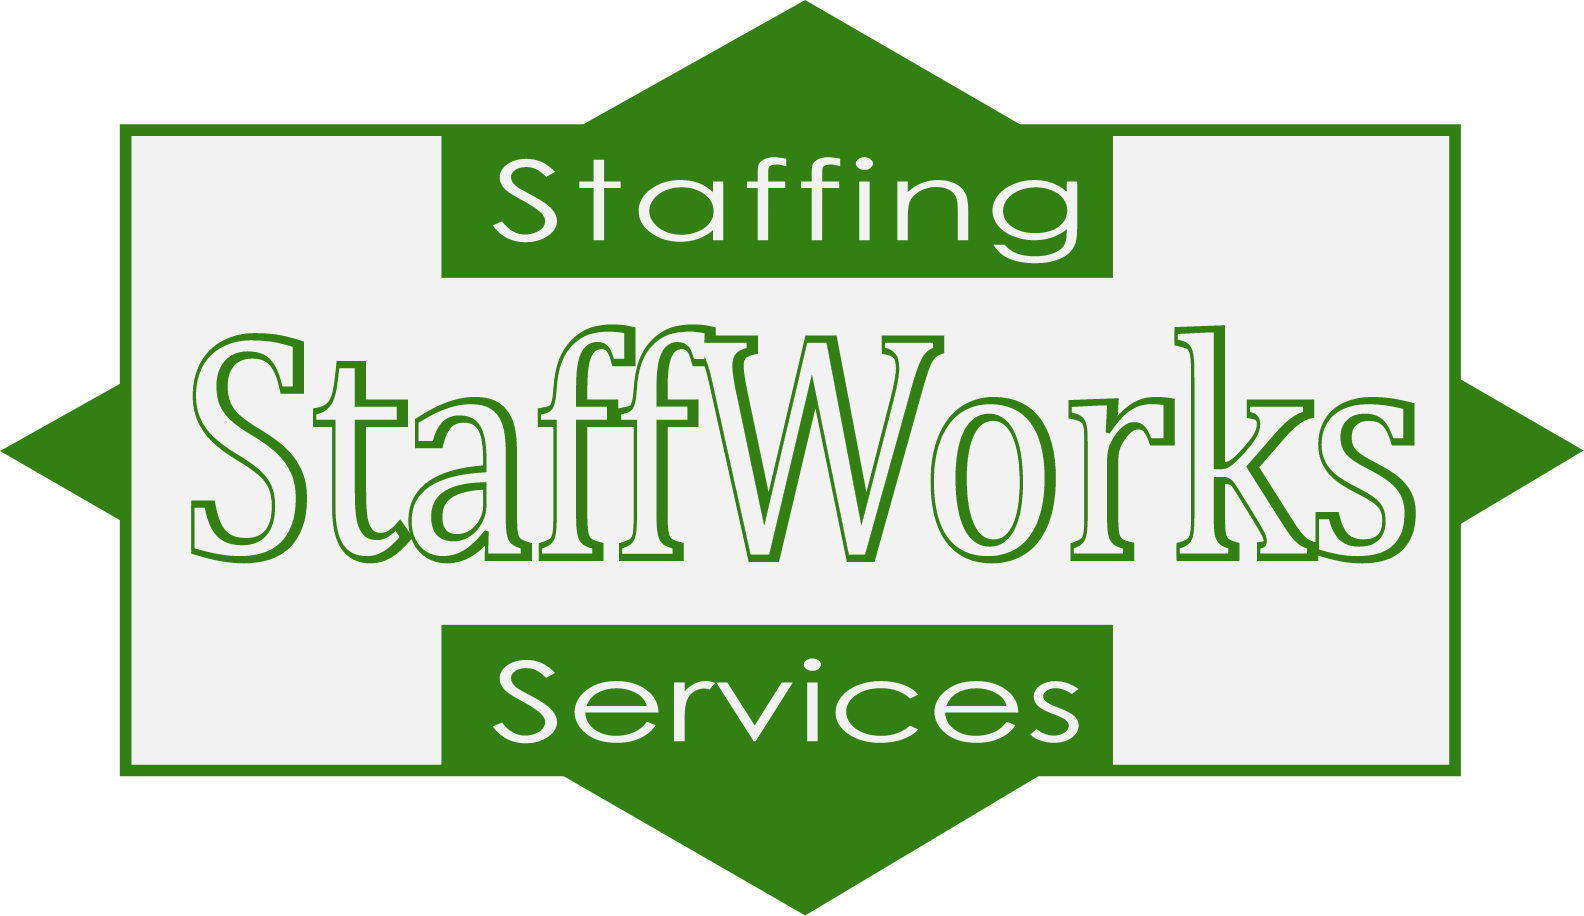 StaffWorks Staffing Services Logo